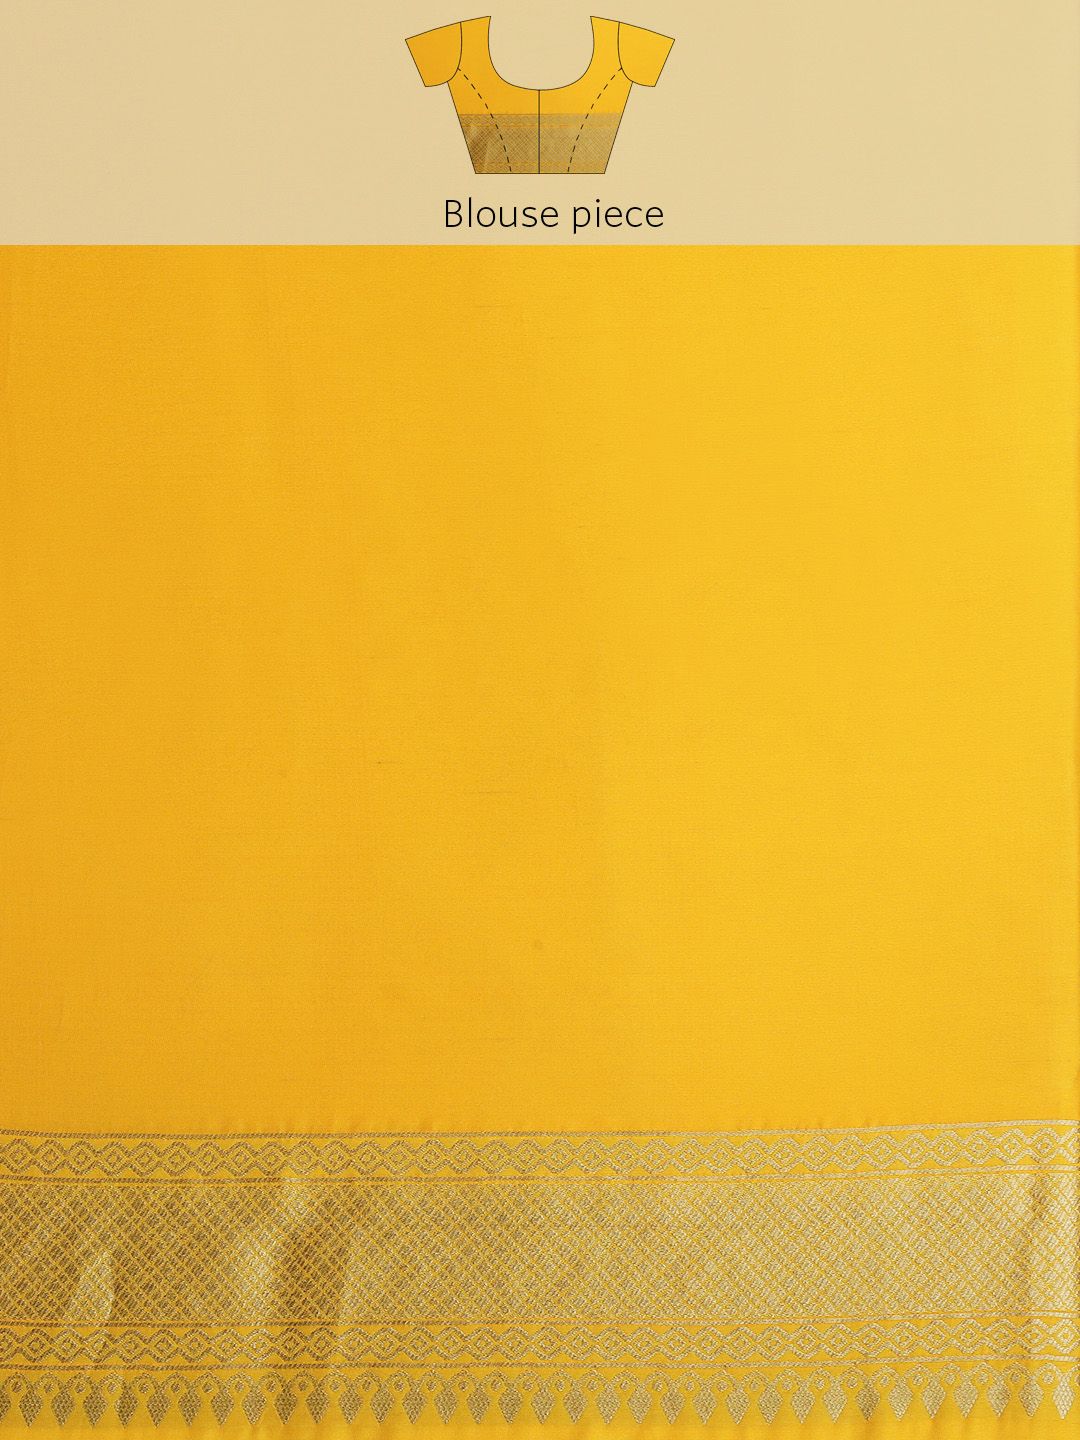 Yellow color banarasi paithani saree on sale